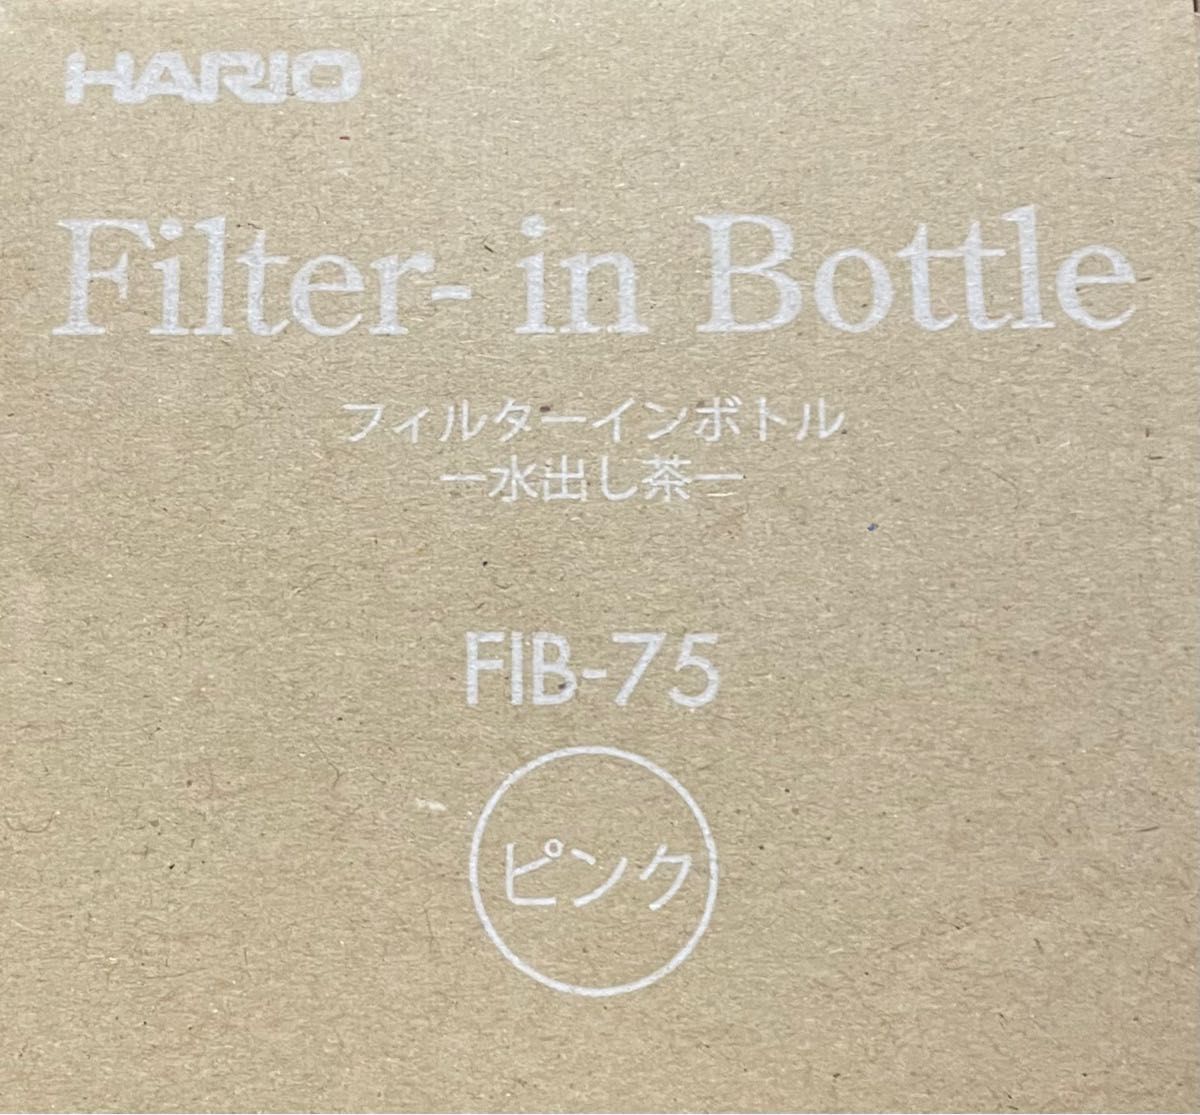 HARIO フィルターインボトル FIB-75